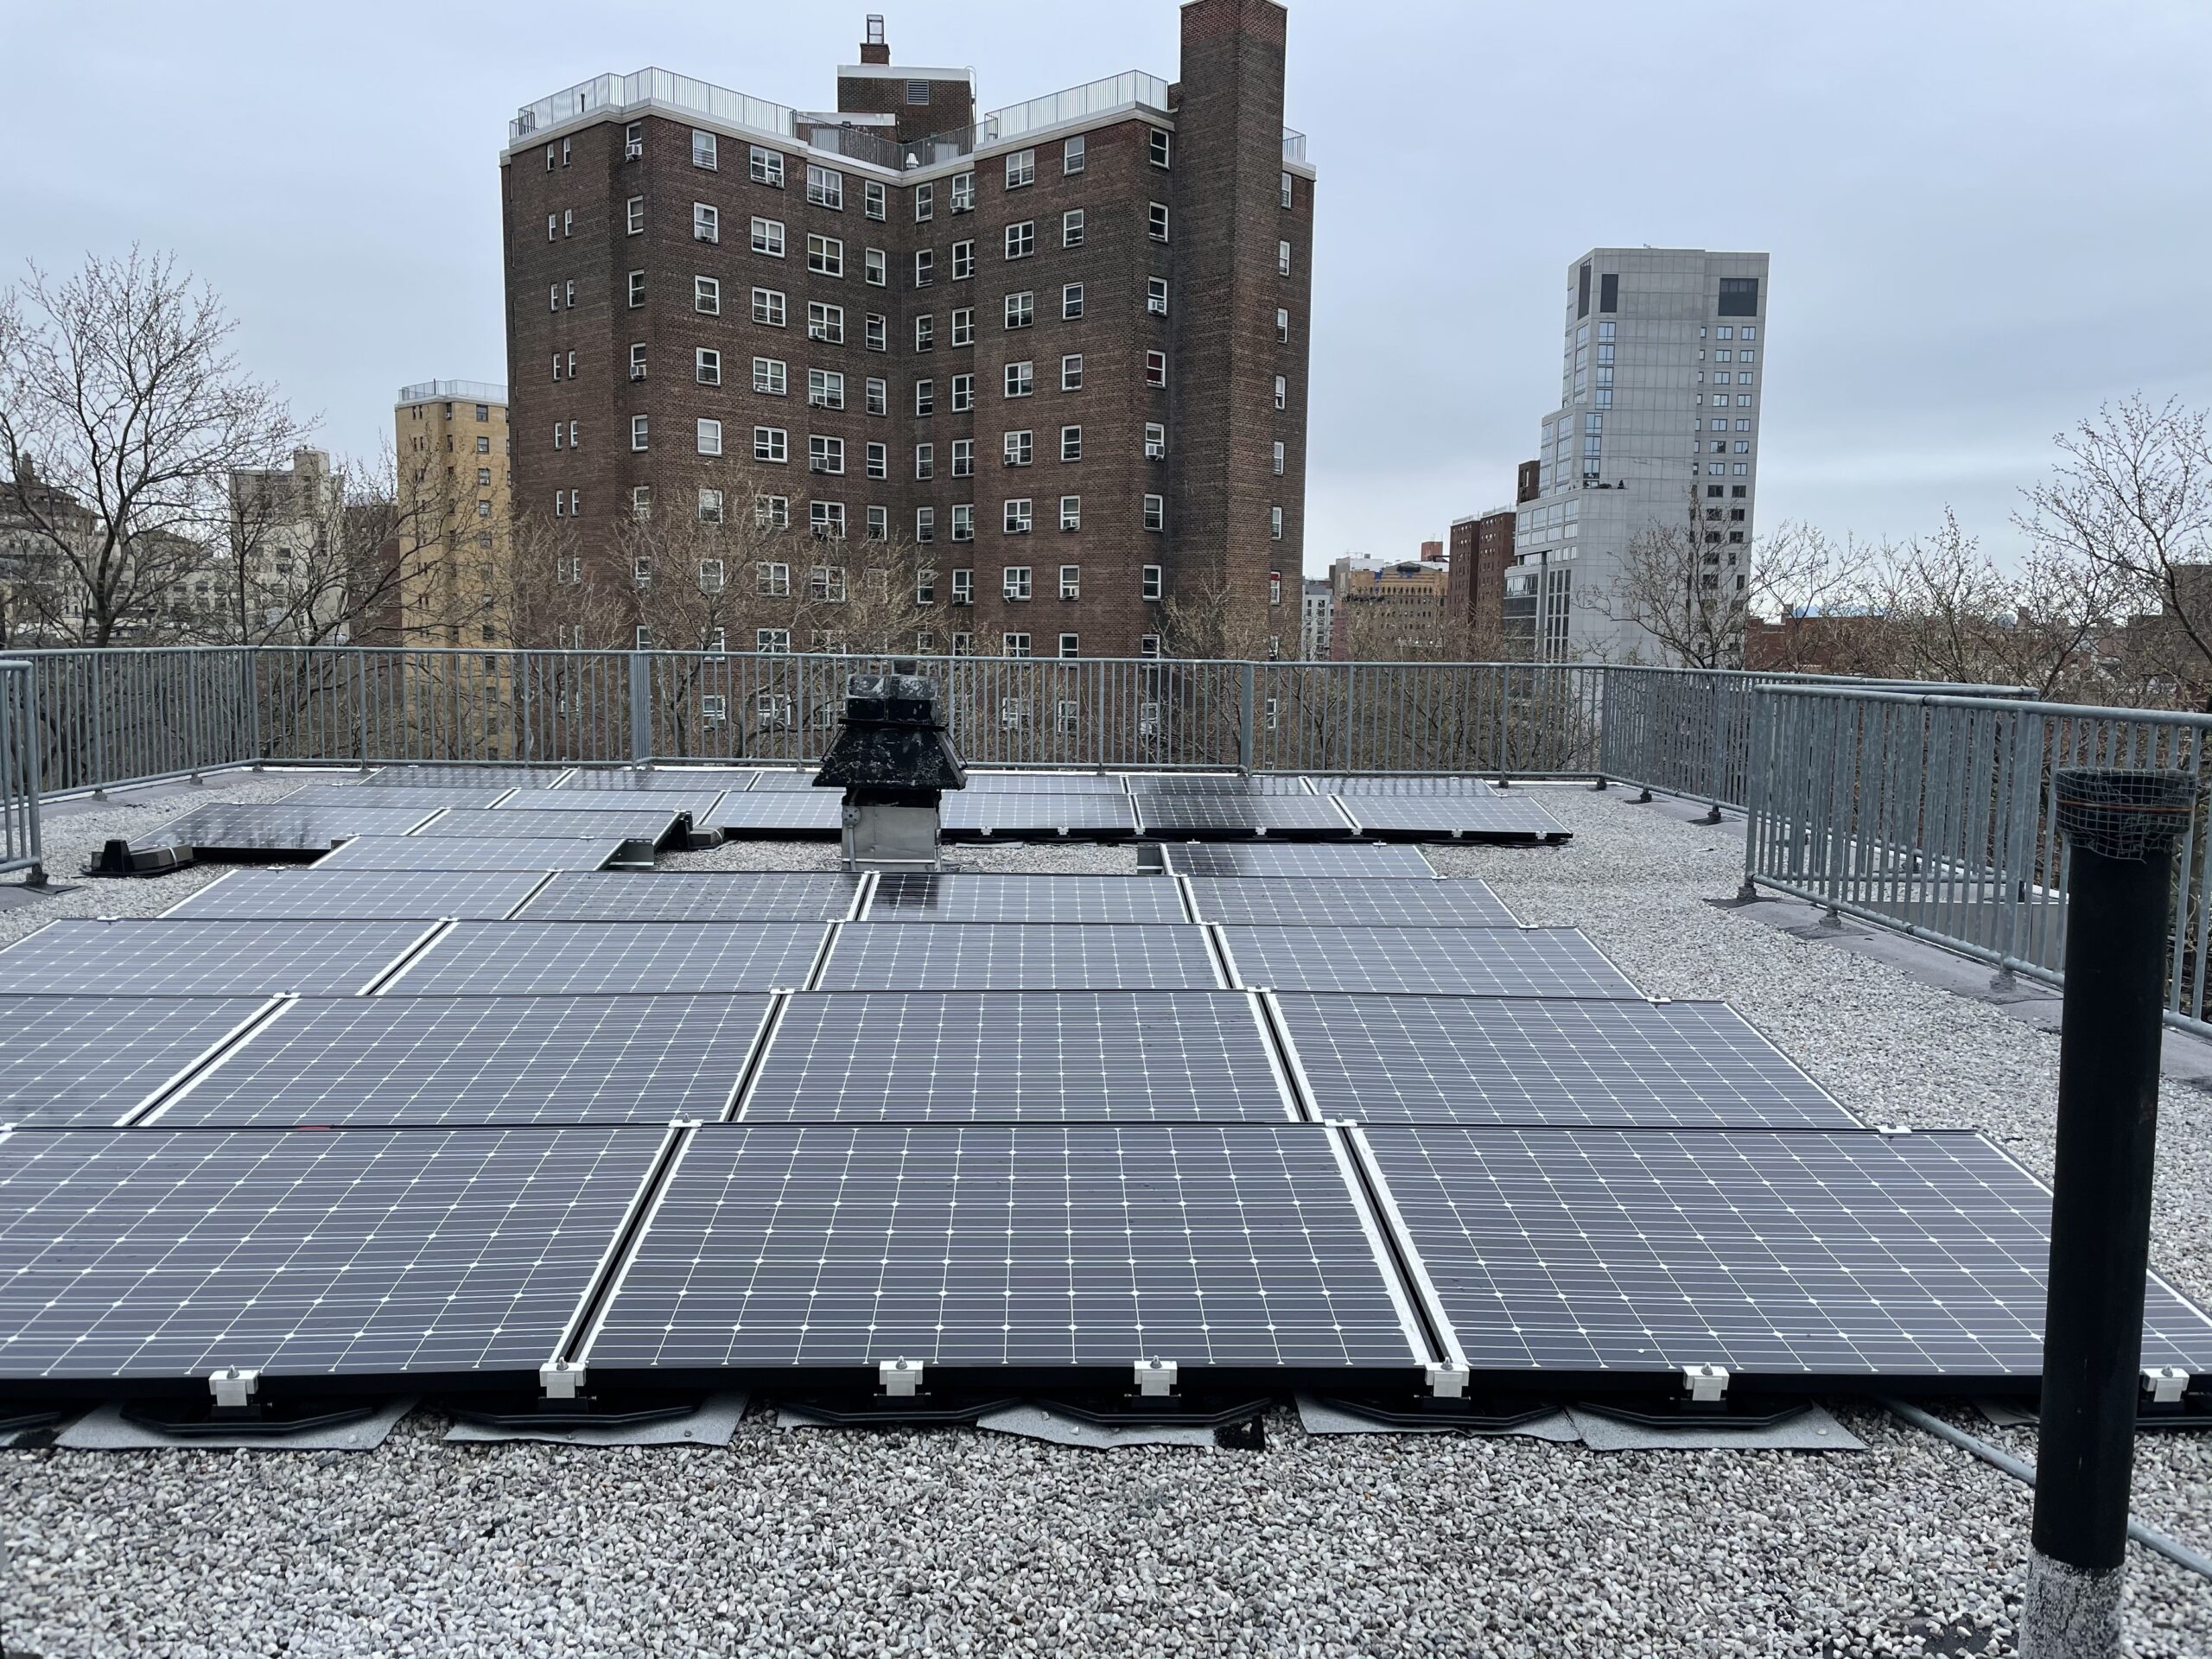 NYC Solar Panels